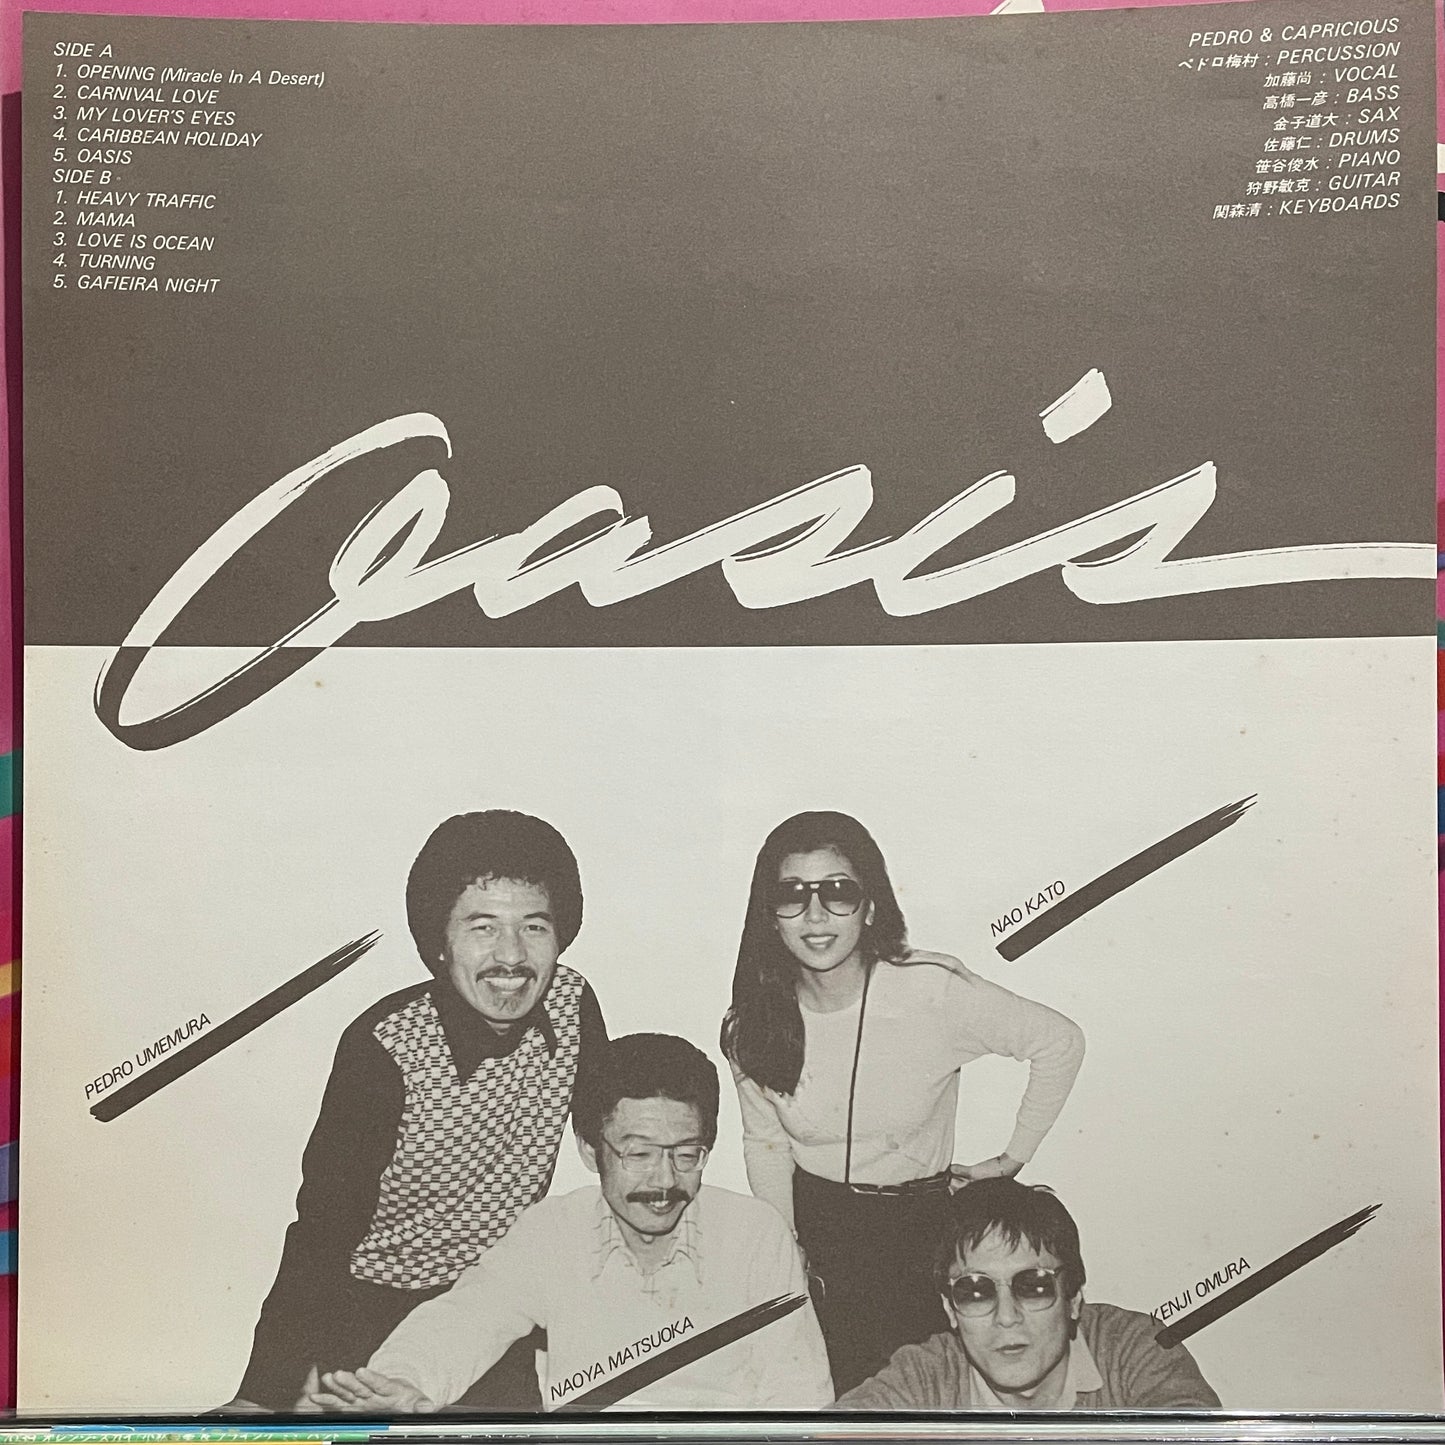 Pedro & Capricious “Oasis” (1980)